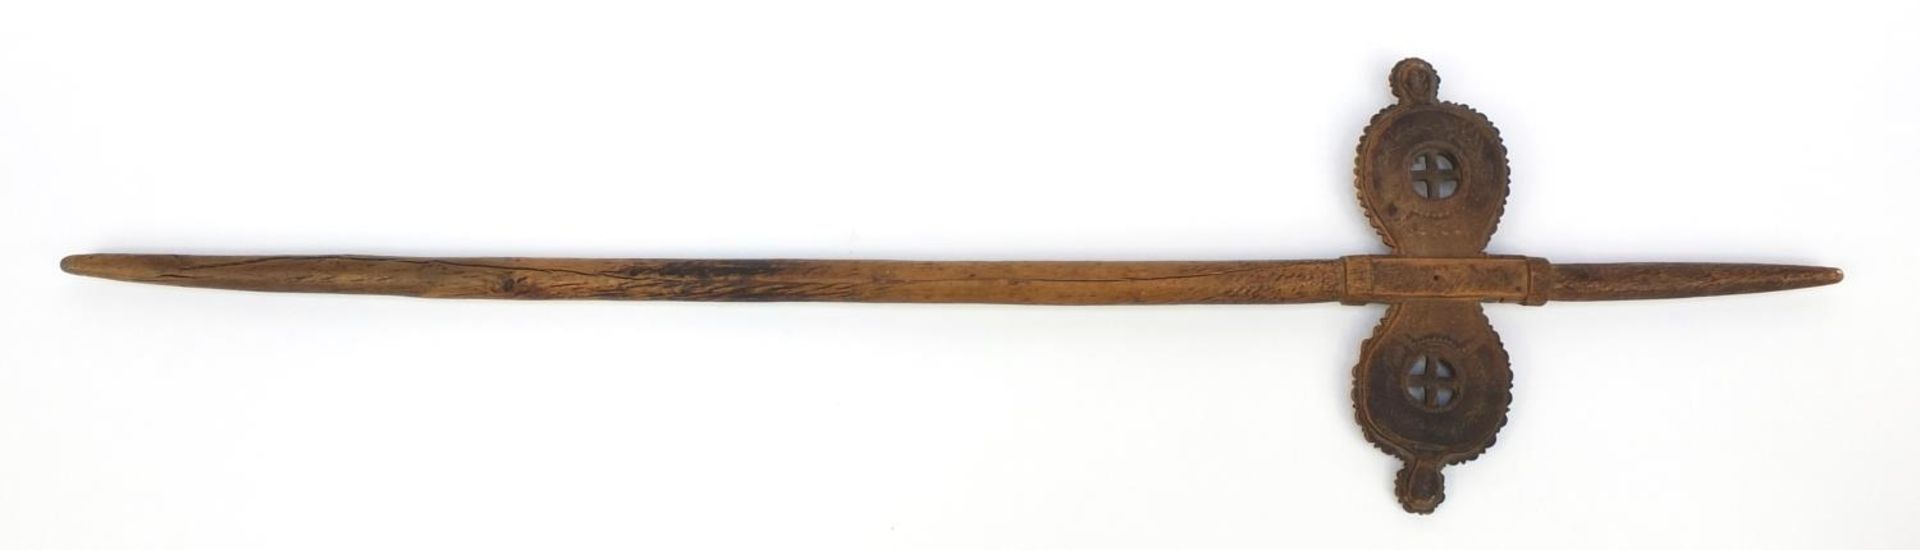 Scandinavian carved wooden pole, 80cm long - Image 2 of 3